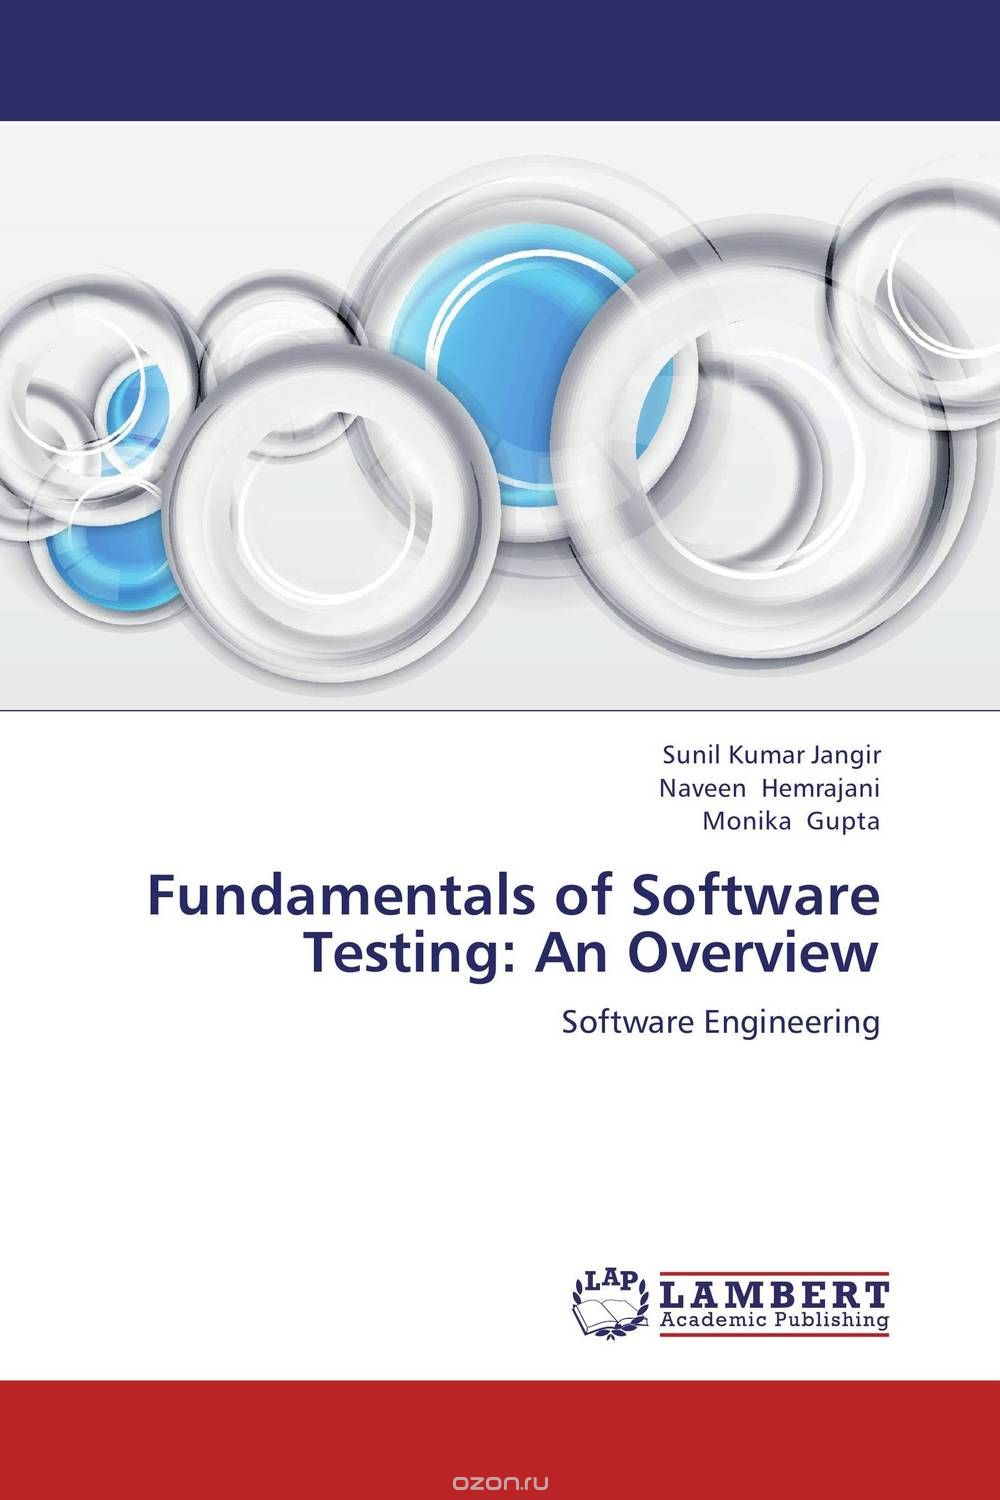 Скачать книгу "Fundamentals of Software Testing: An Overview"